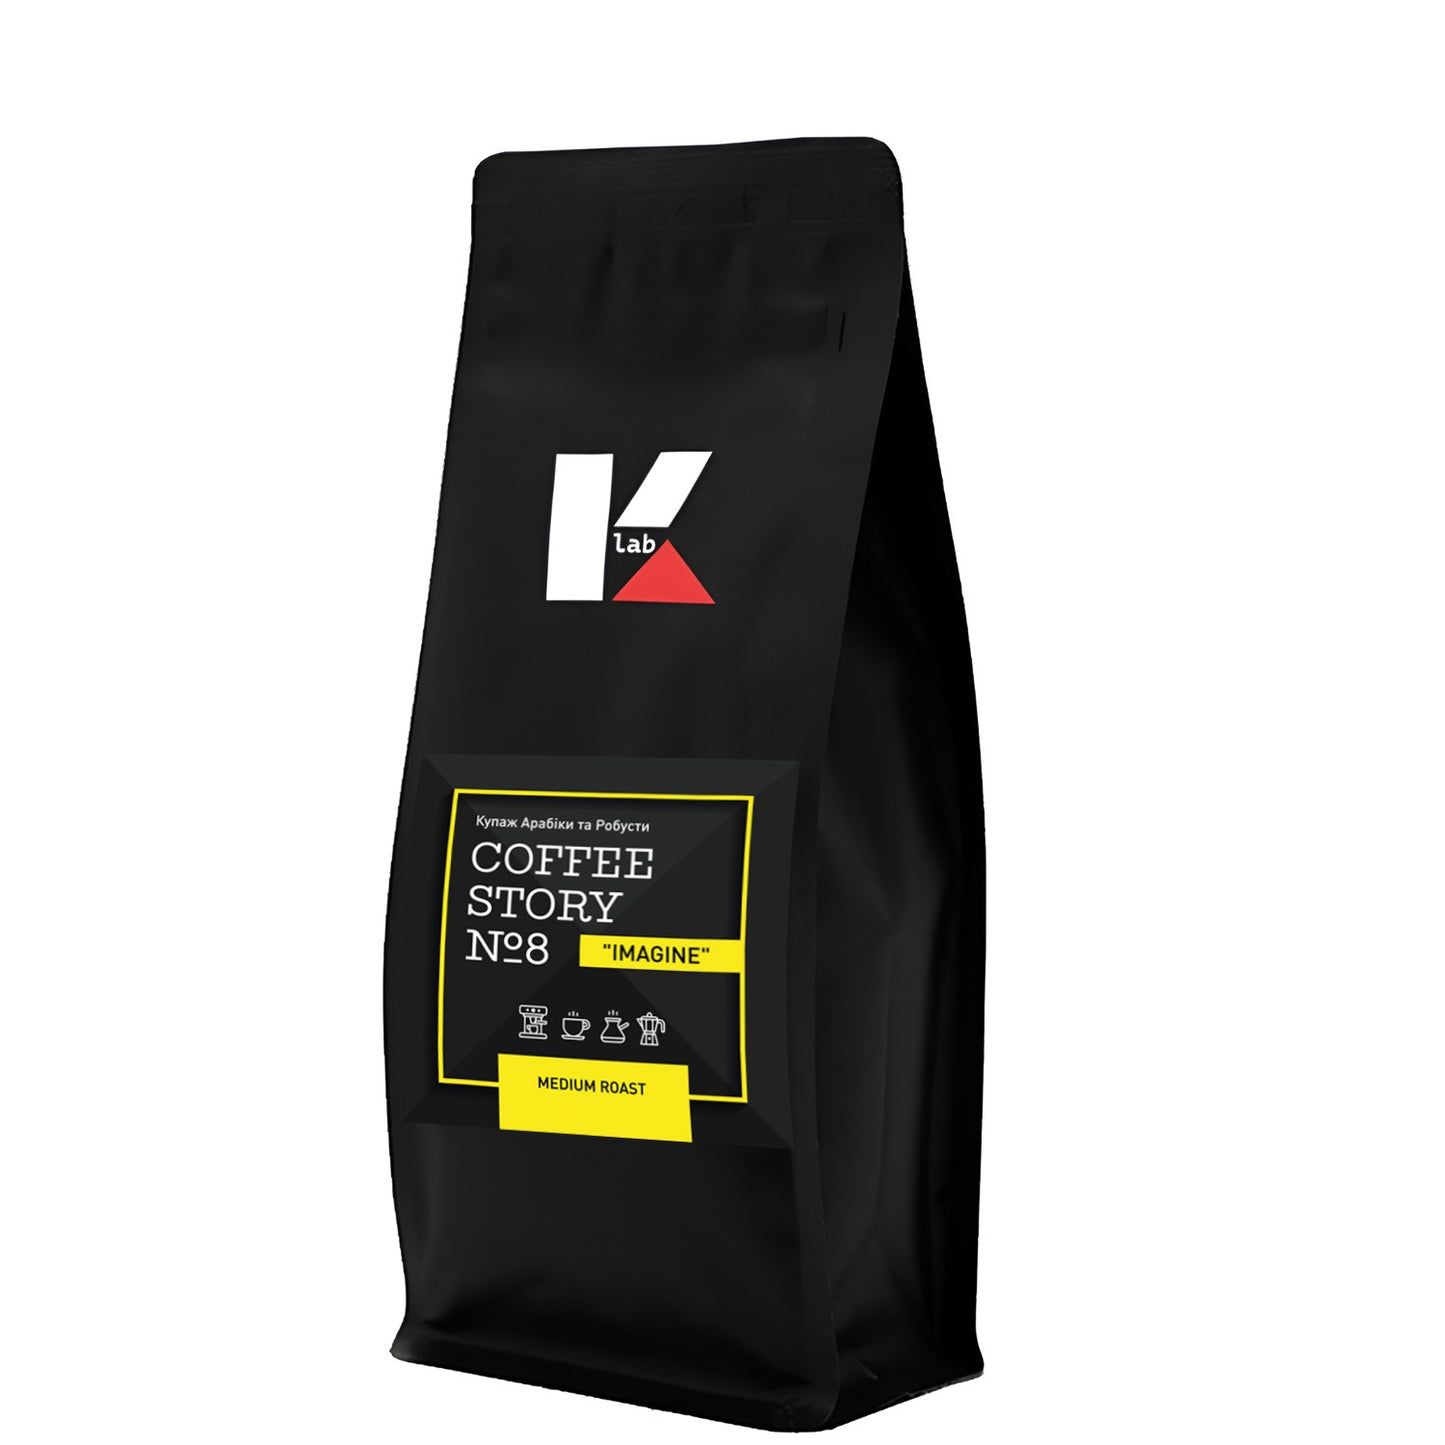 COFFEE STORY №8 - Klab (1kg front)